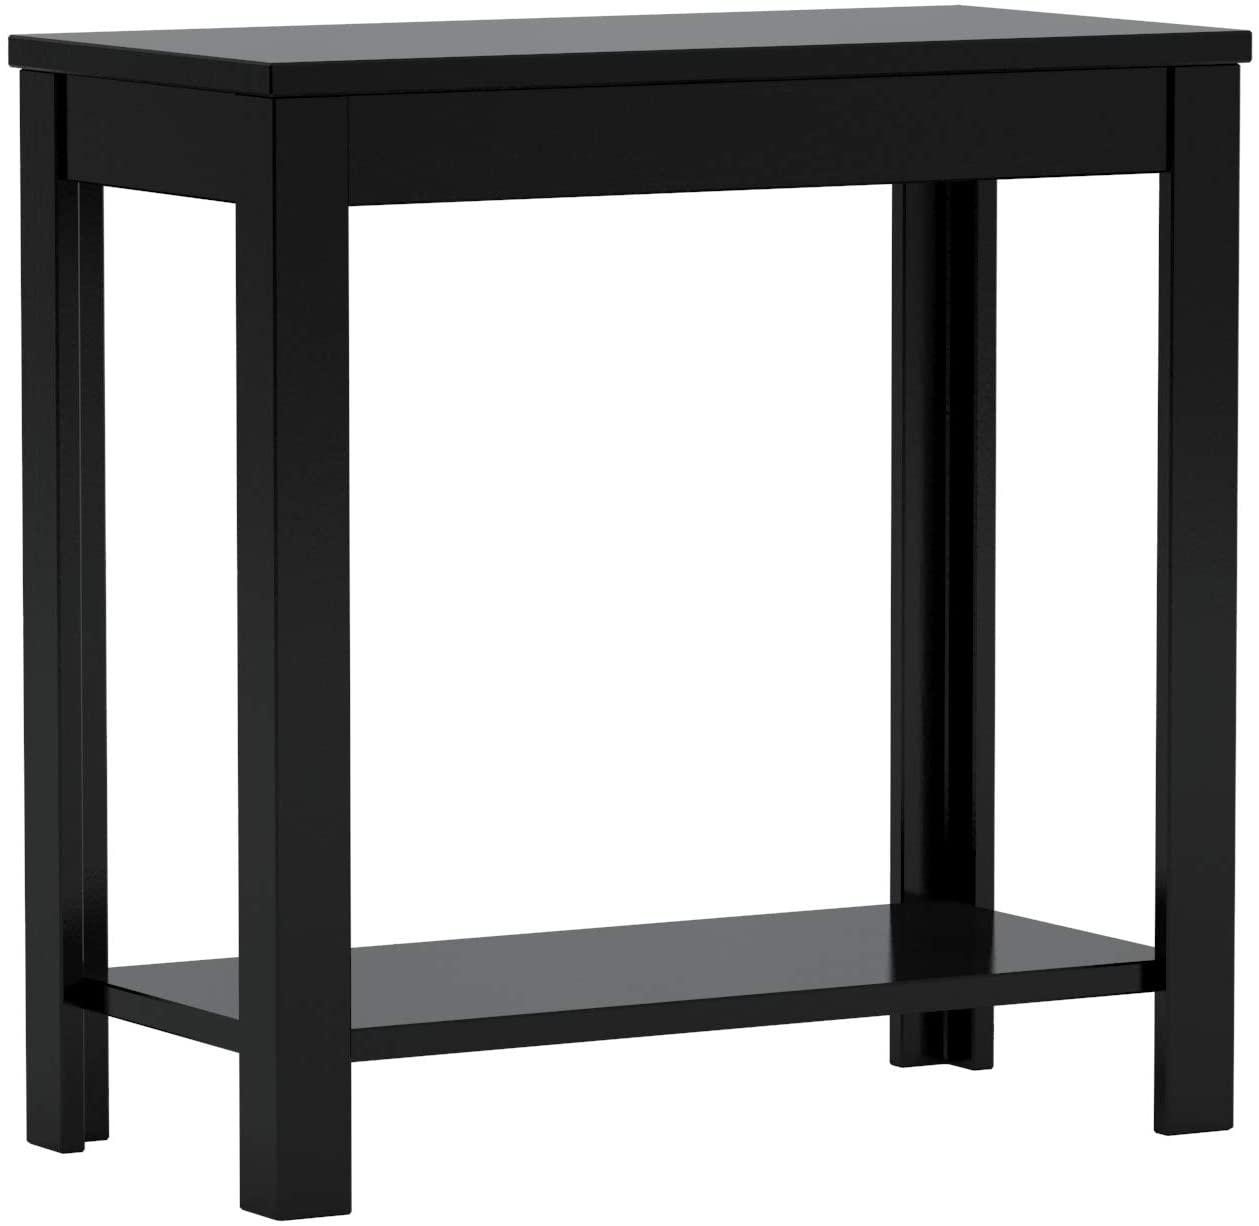 Rustic, Simple 2 End Tables Pierce 7710-BK-2pcs in Black 